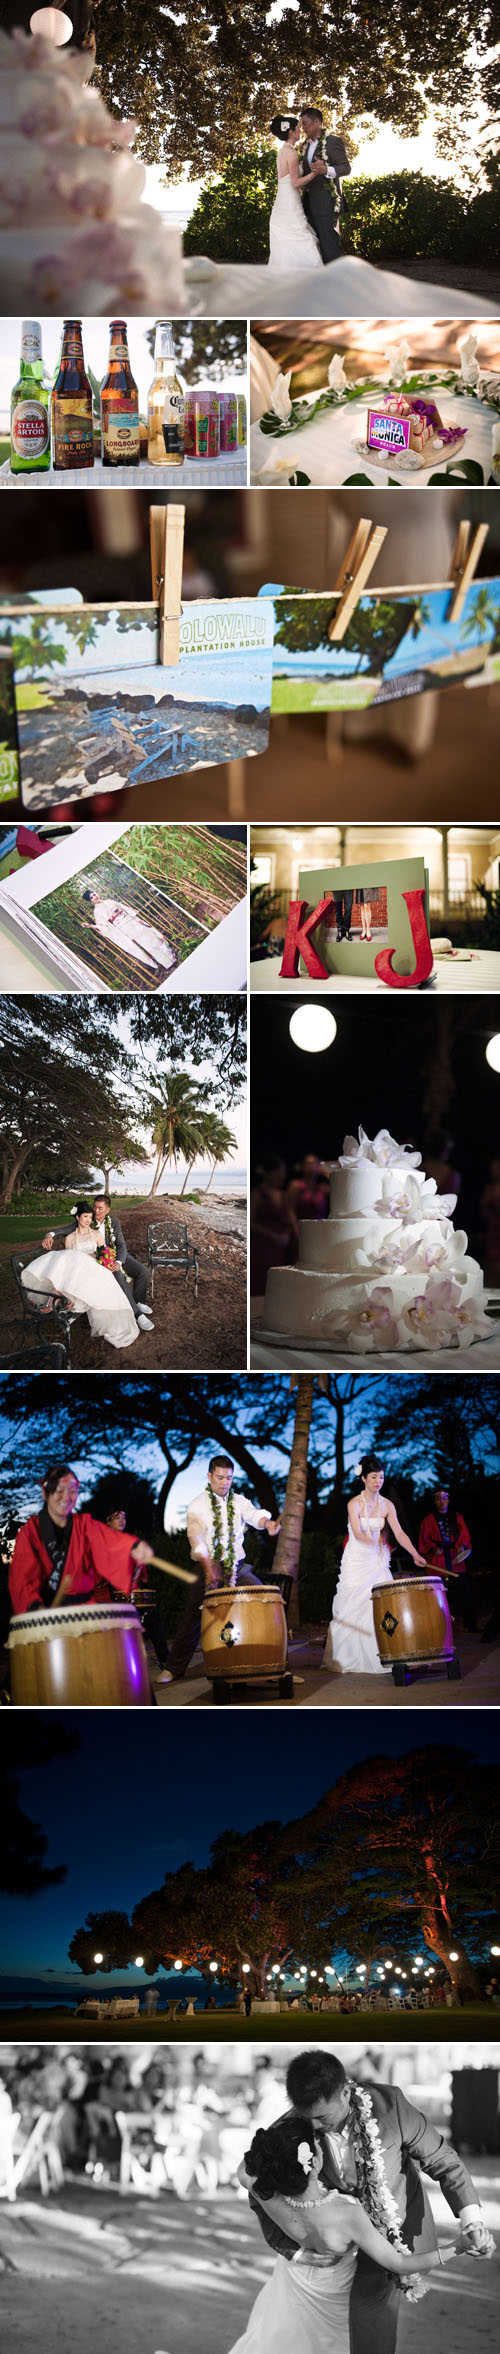 maui, hawaii destination real wedding photos by Derek Wong Photography